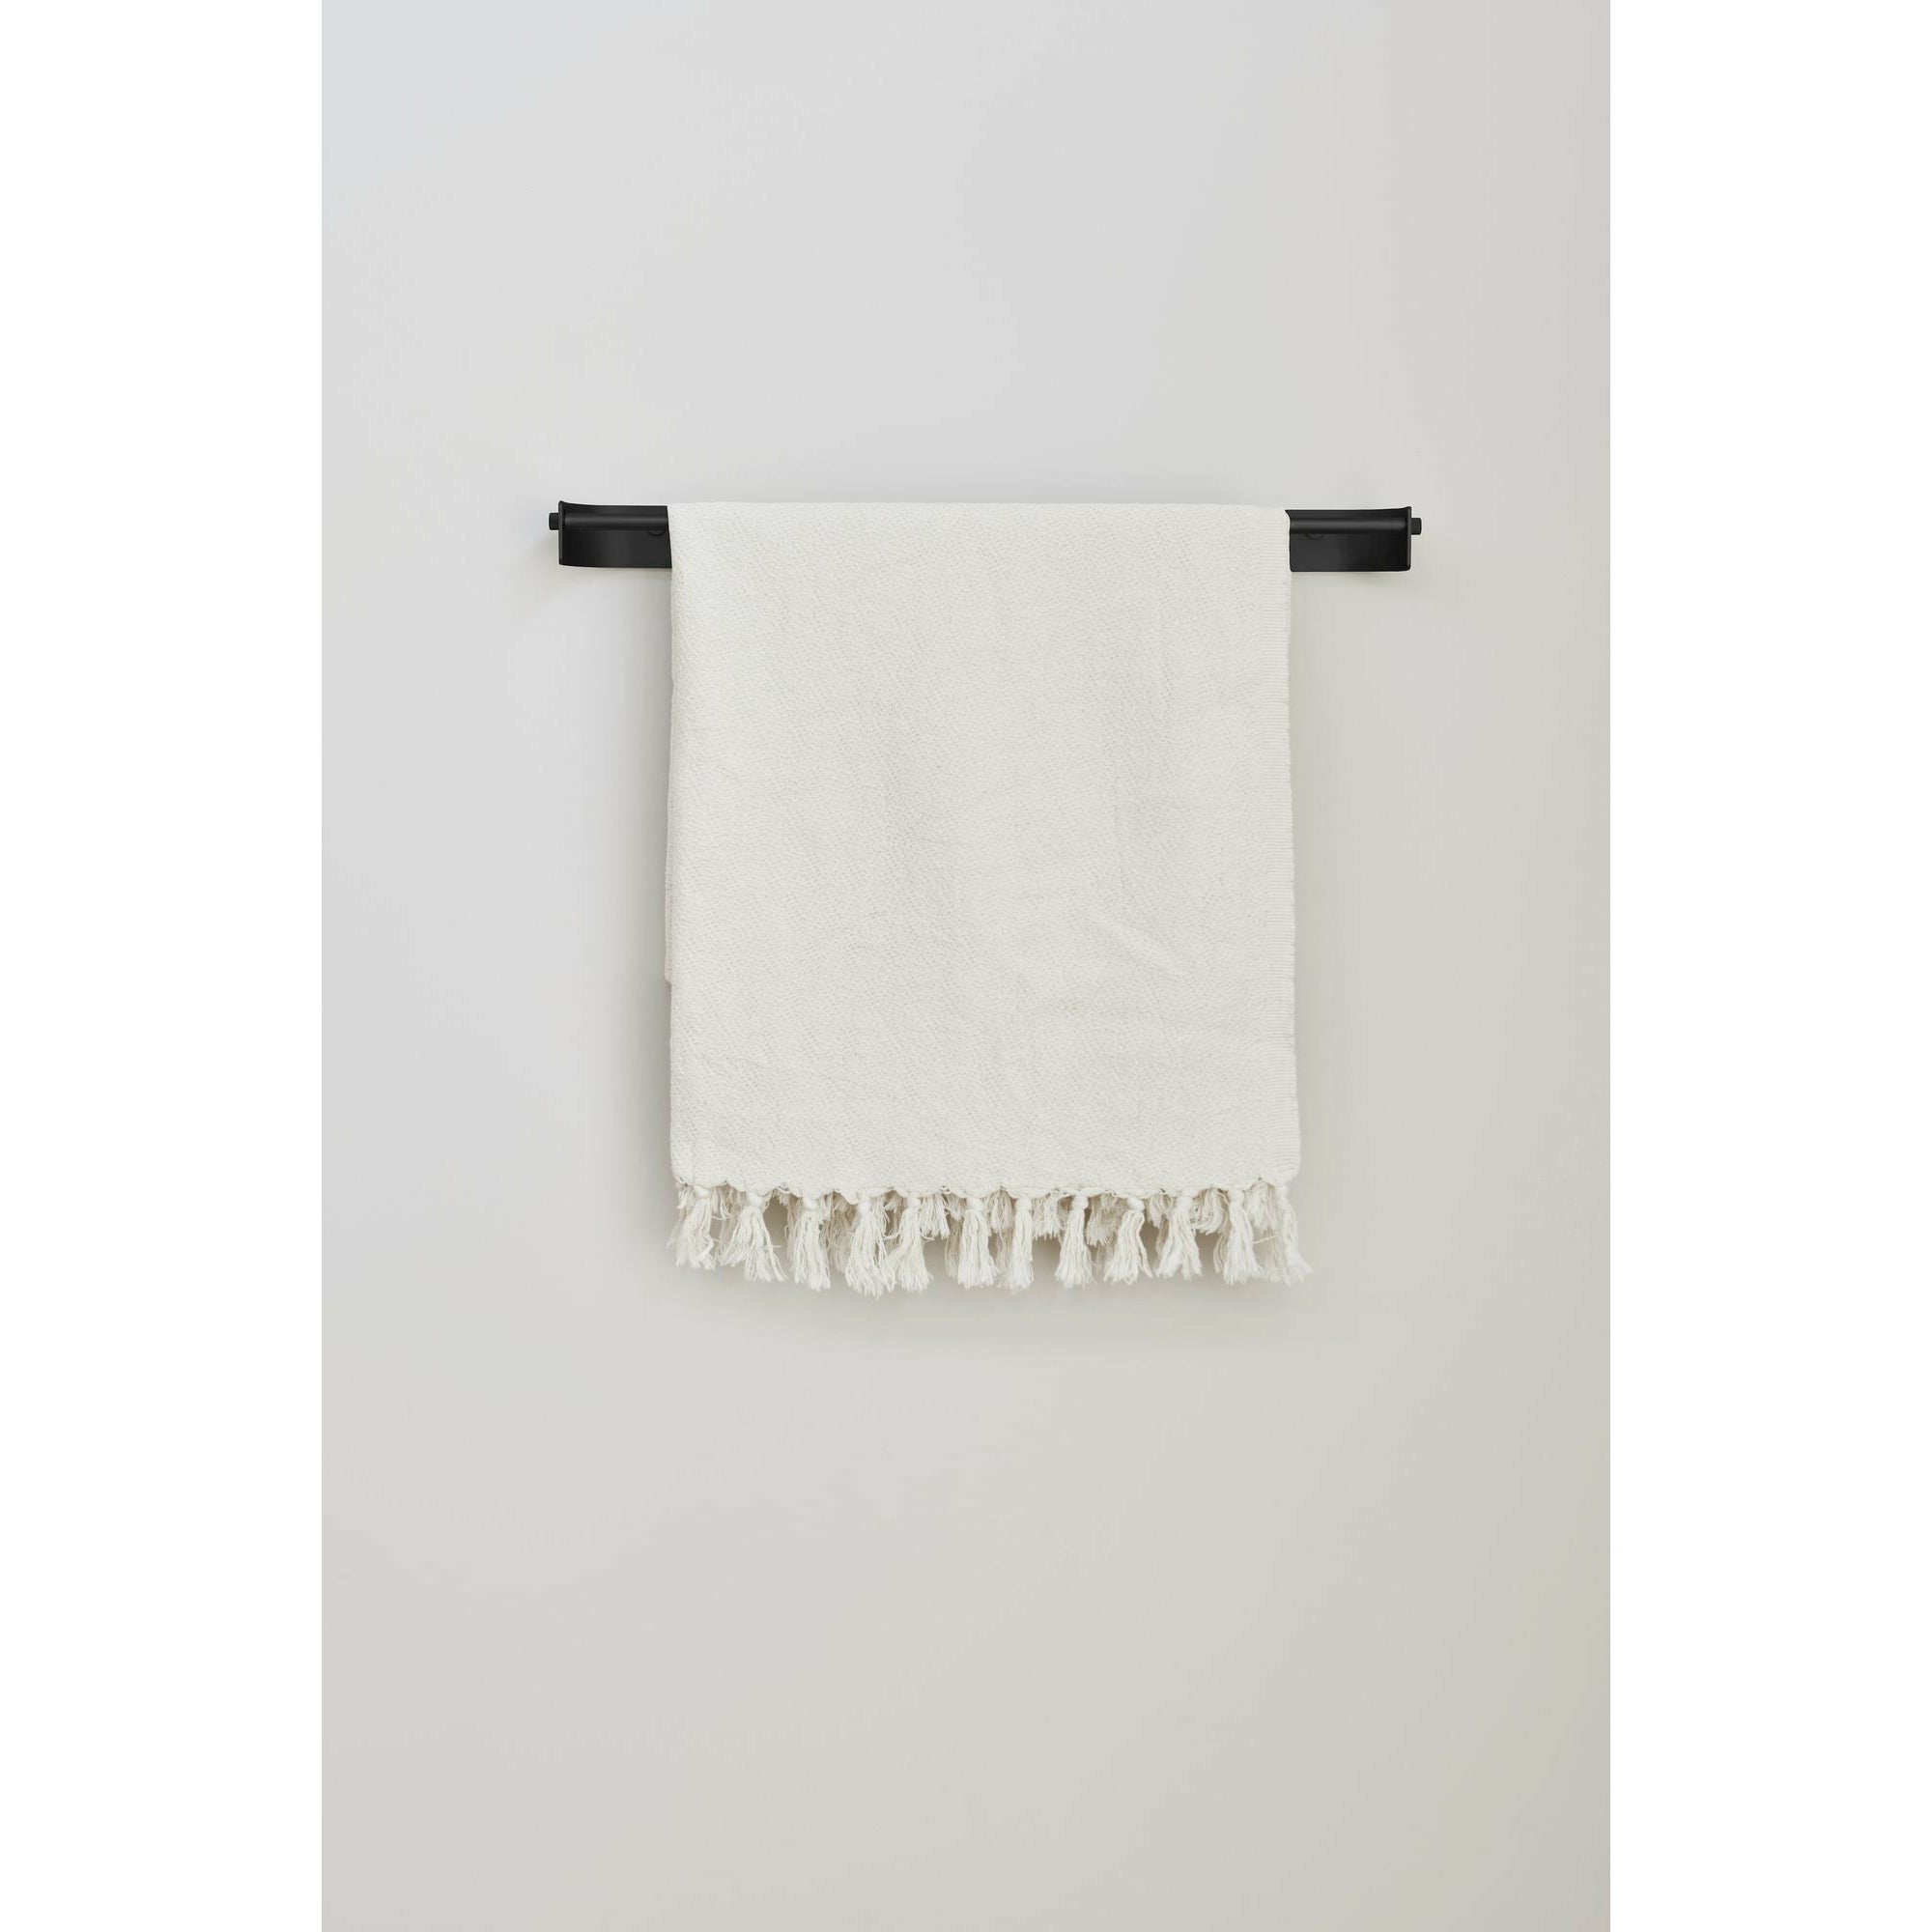 Form & Refine Arc Håndklæde Bar Single. Sort stål